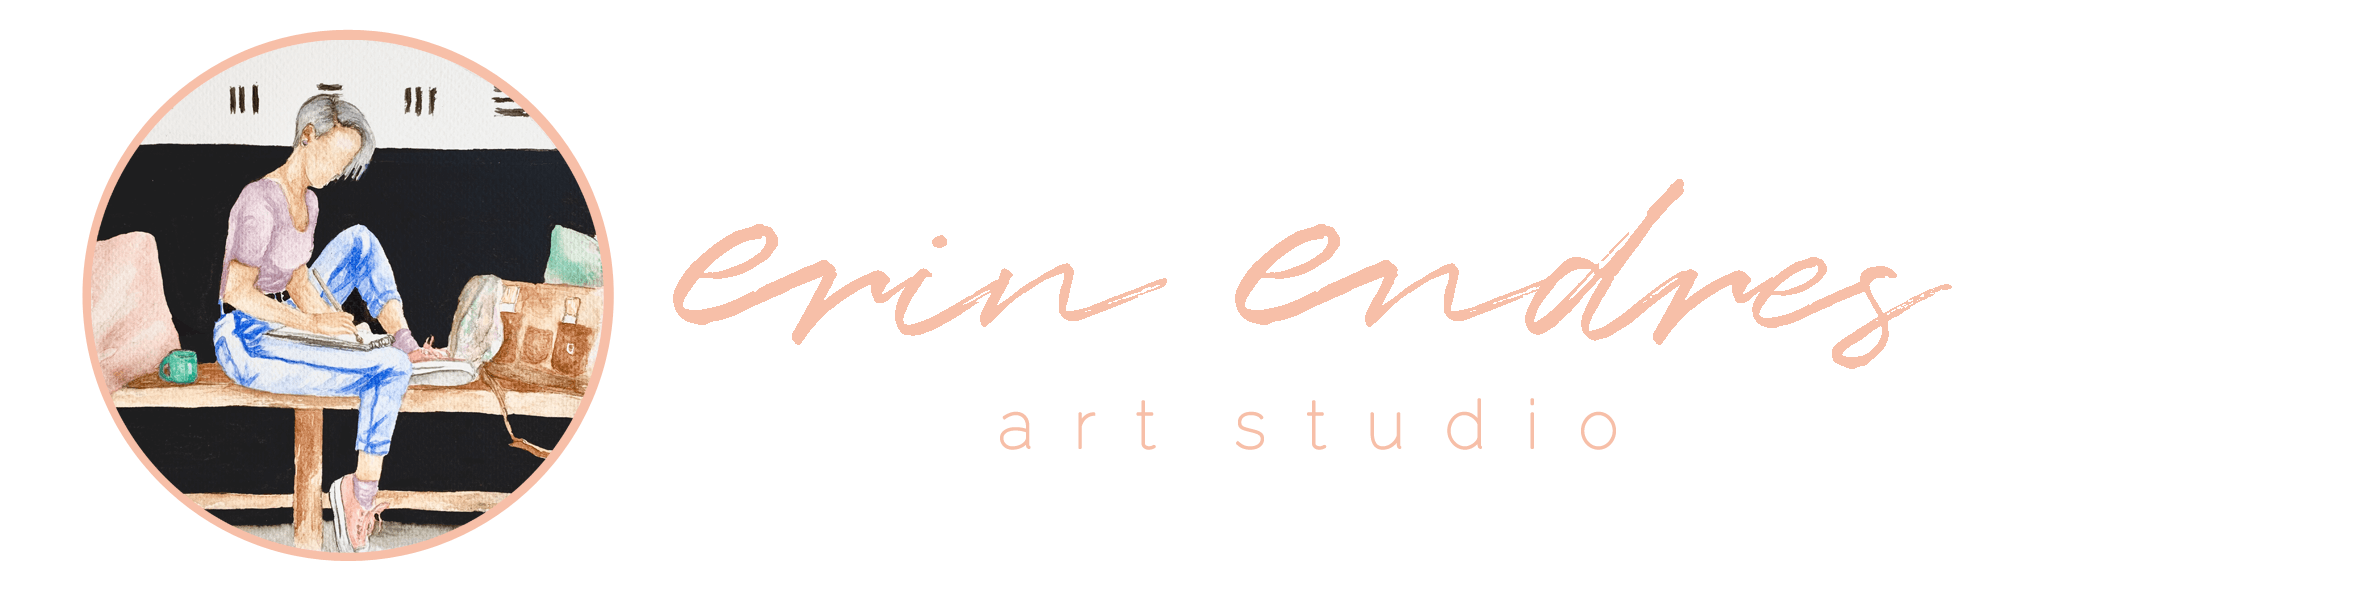 Erin Endres Art Studio - Custom watercolour portraits of people and pets, giclee art prints